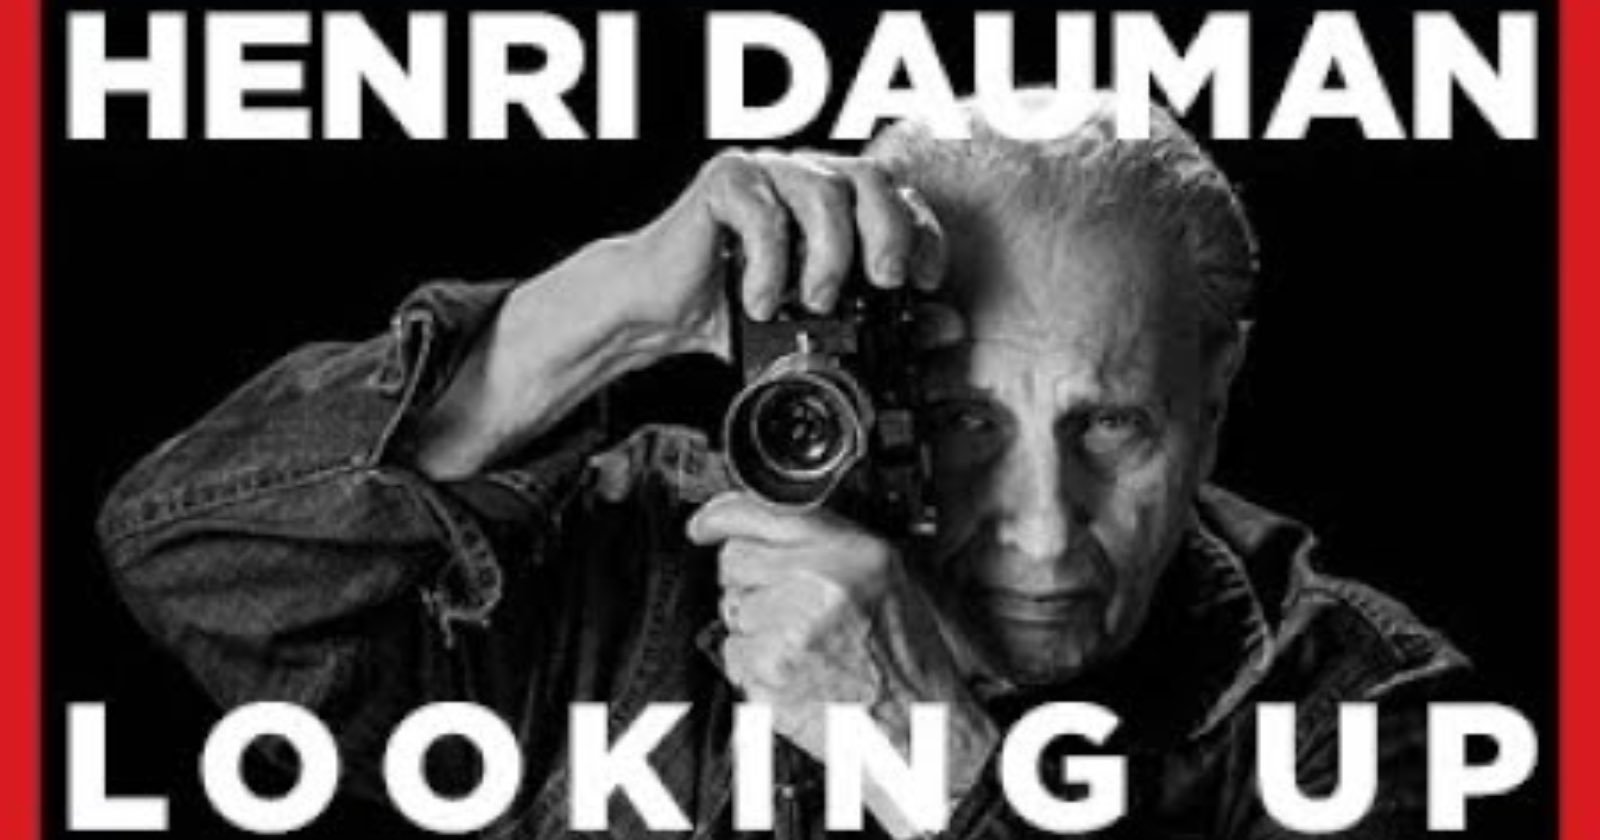  photojournalist holocaust survivor henri dauman dies 